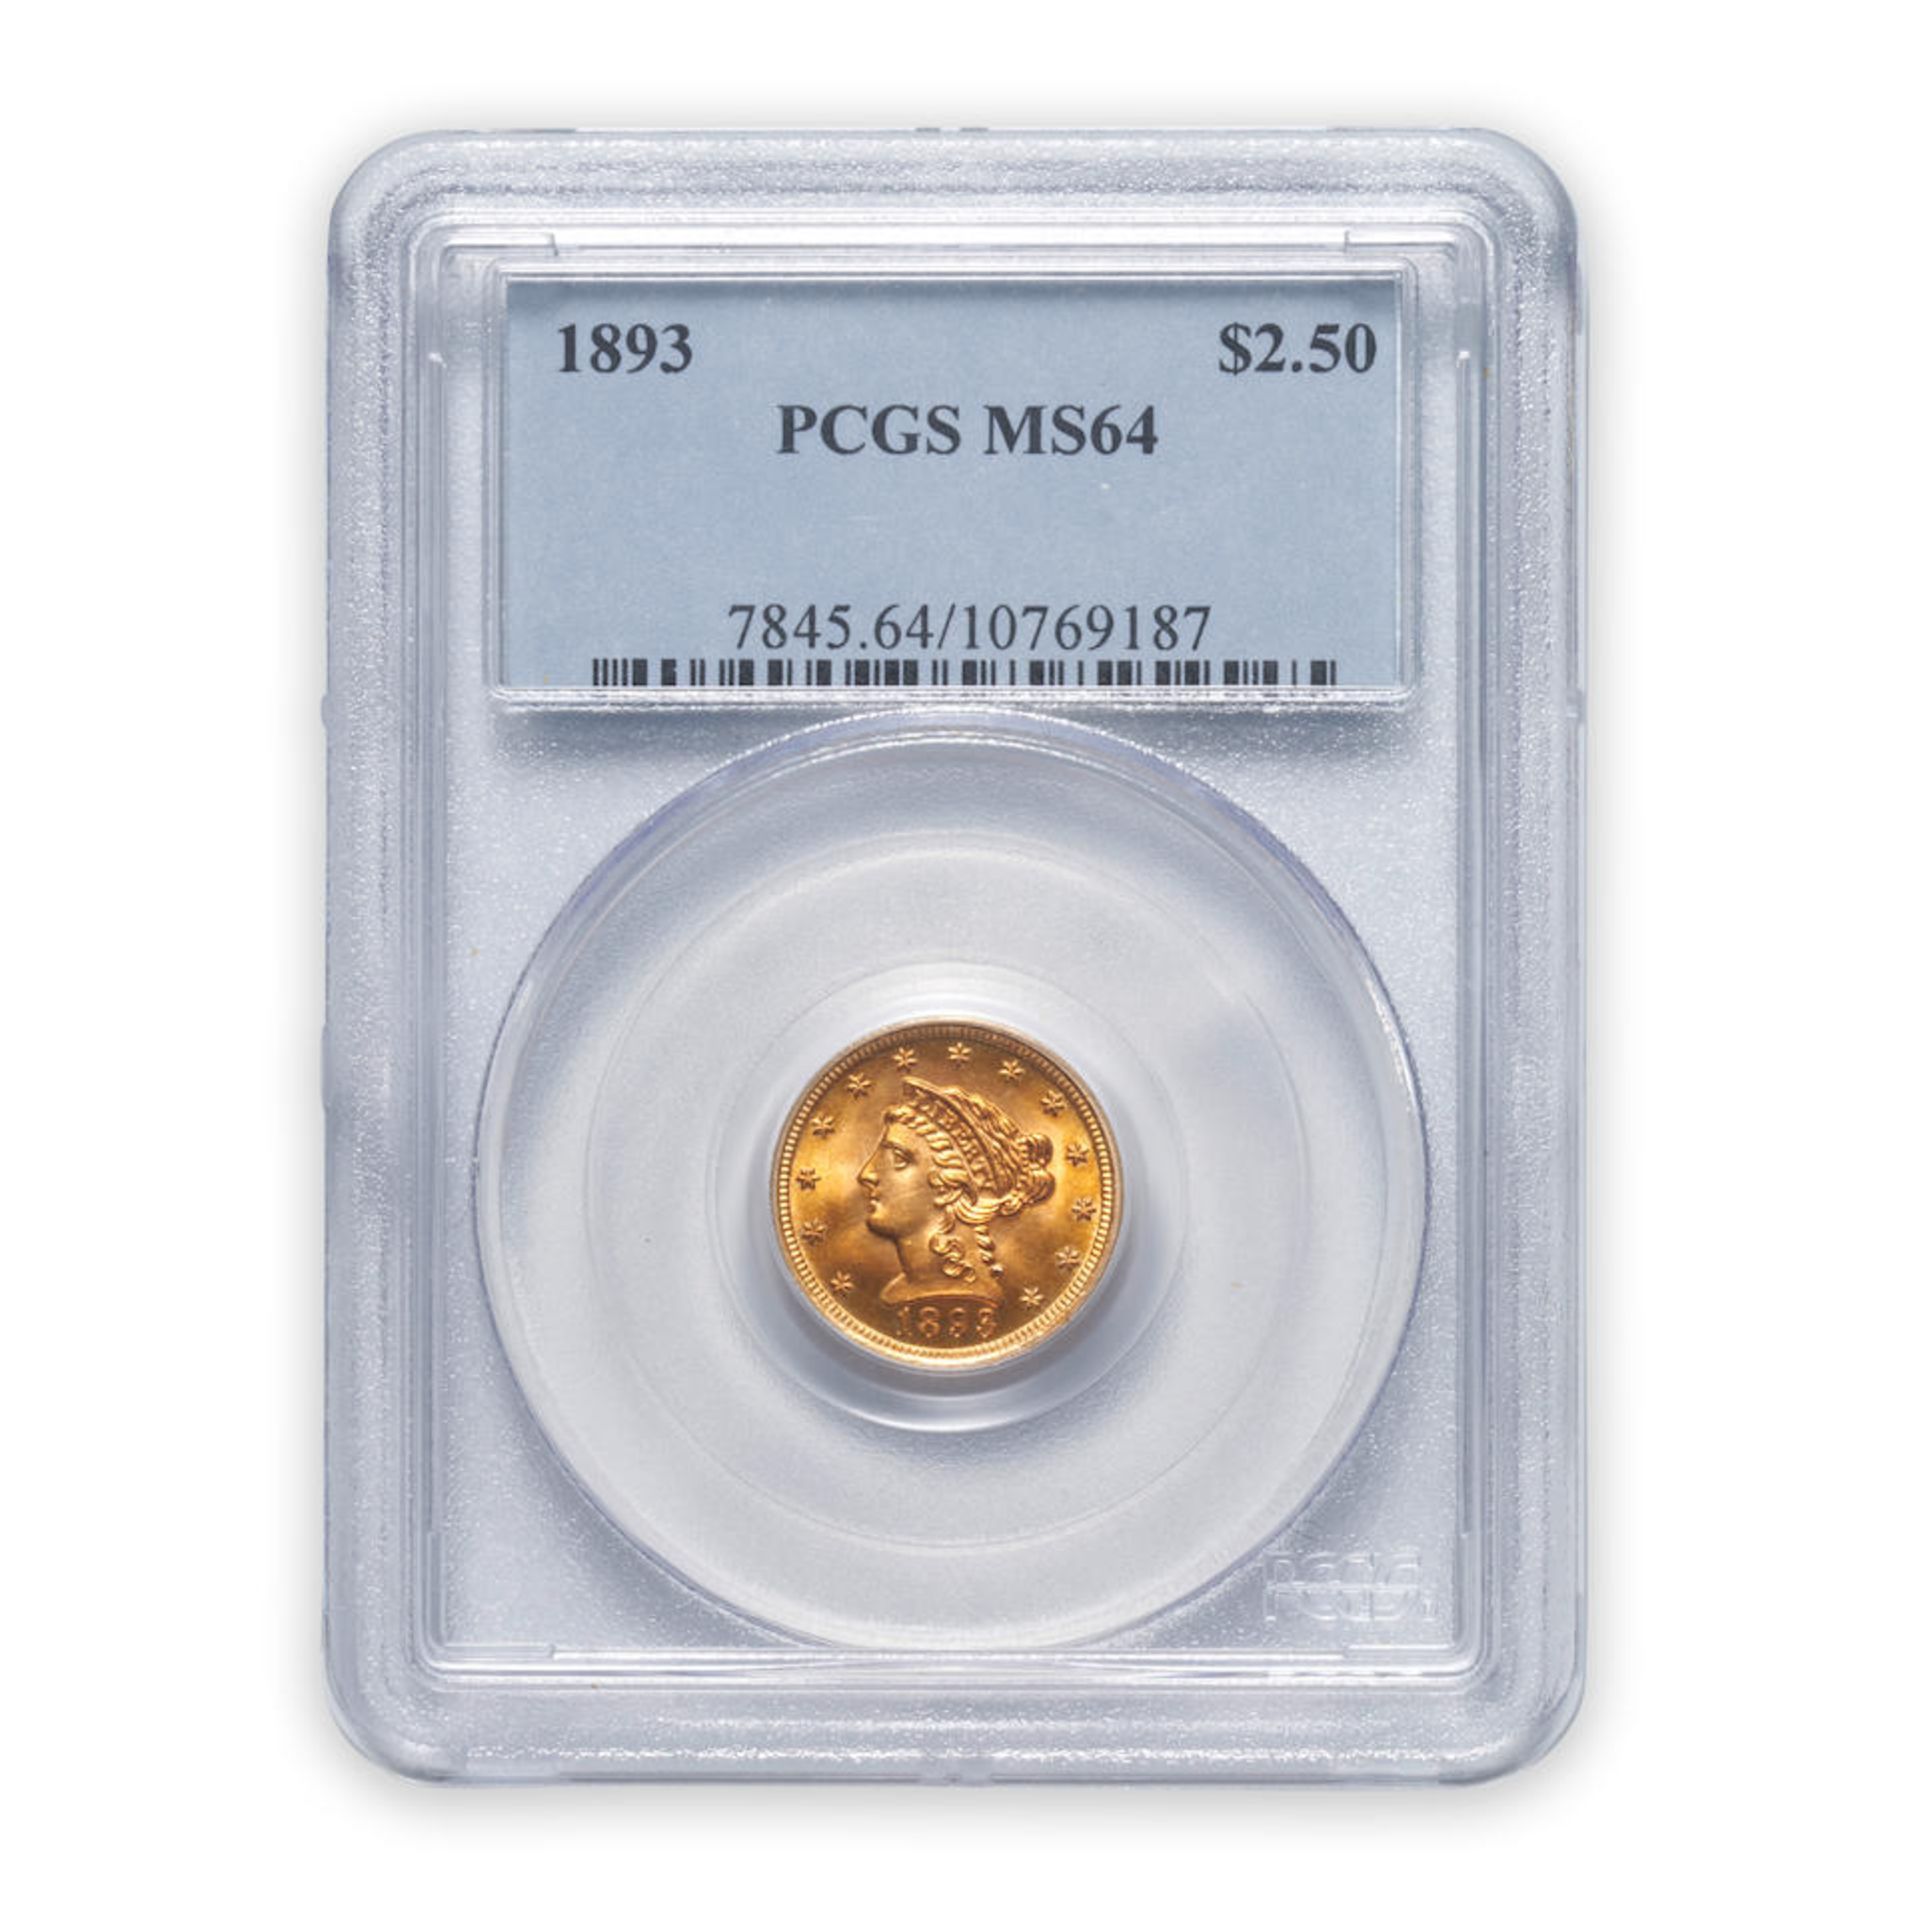 United States 1893 Liberty Head $2.50 Quarter Eagle Gold Coin.